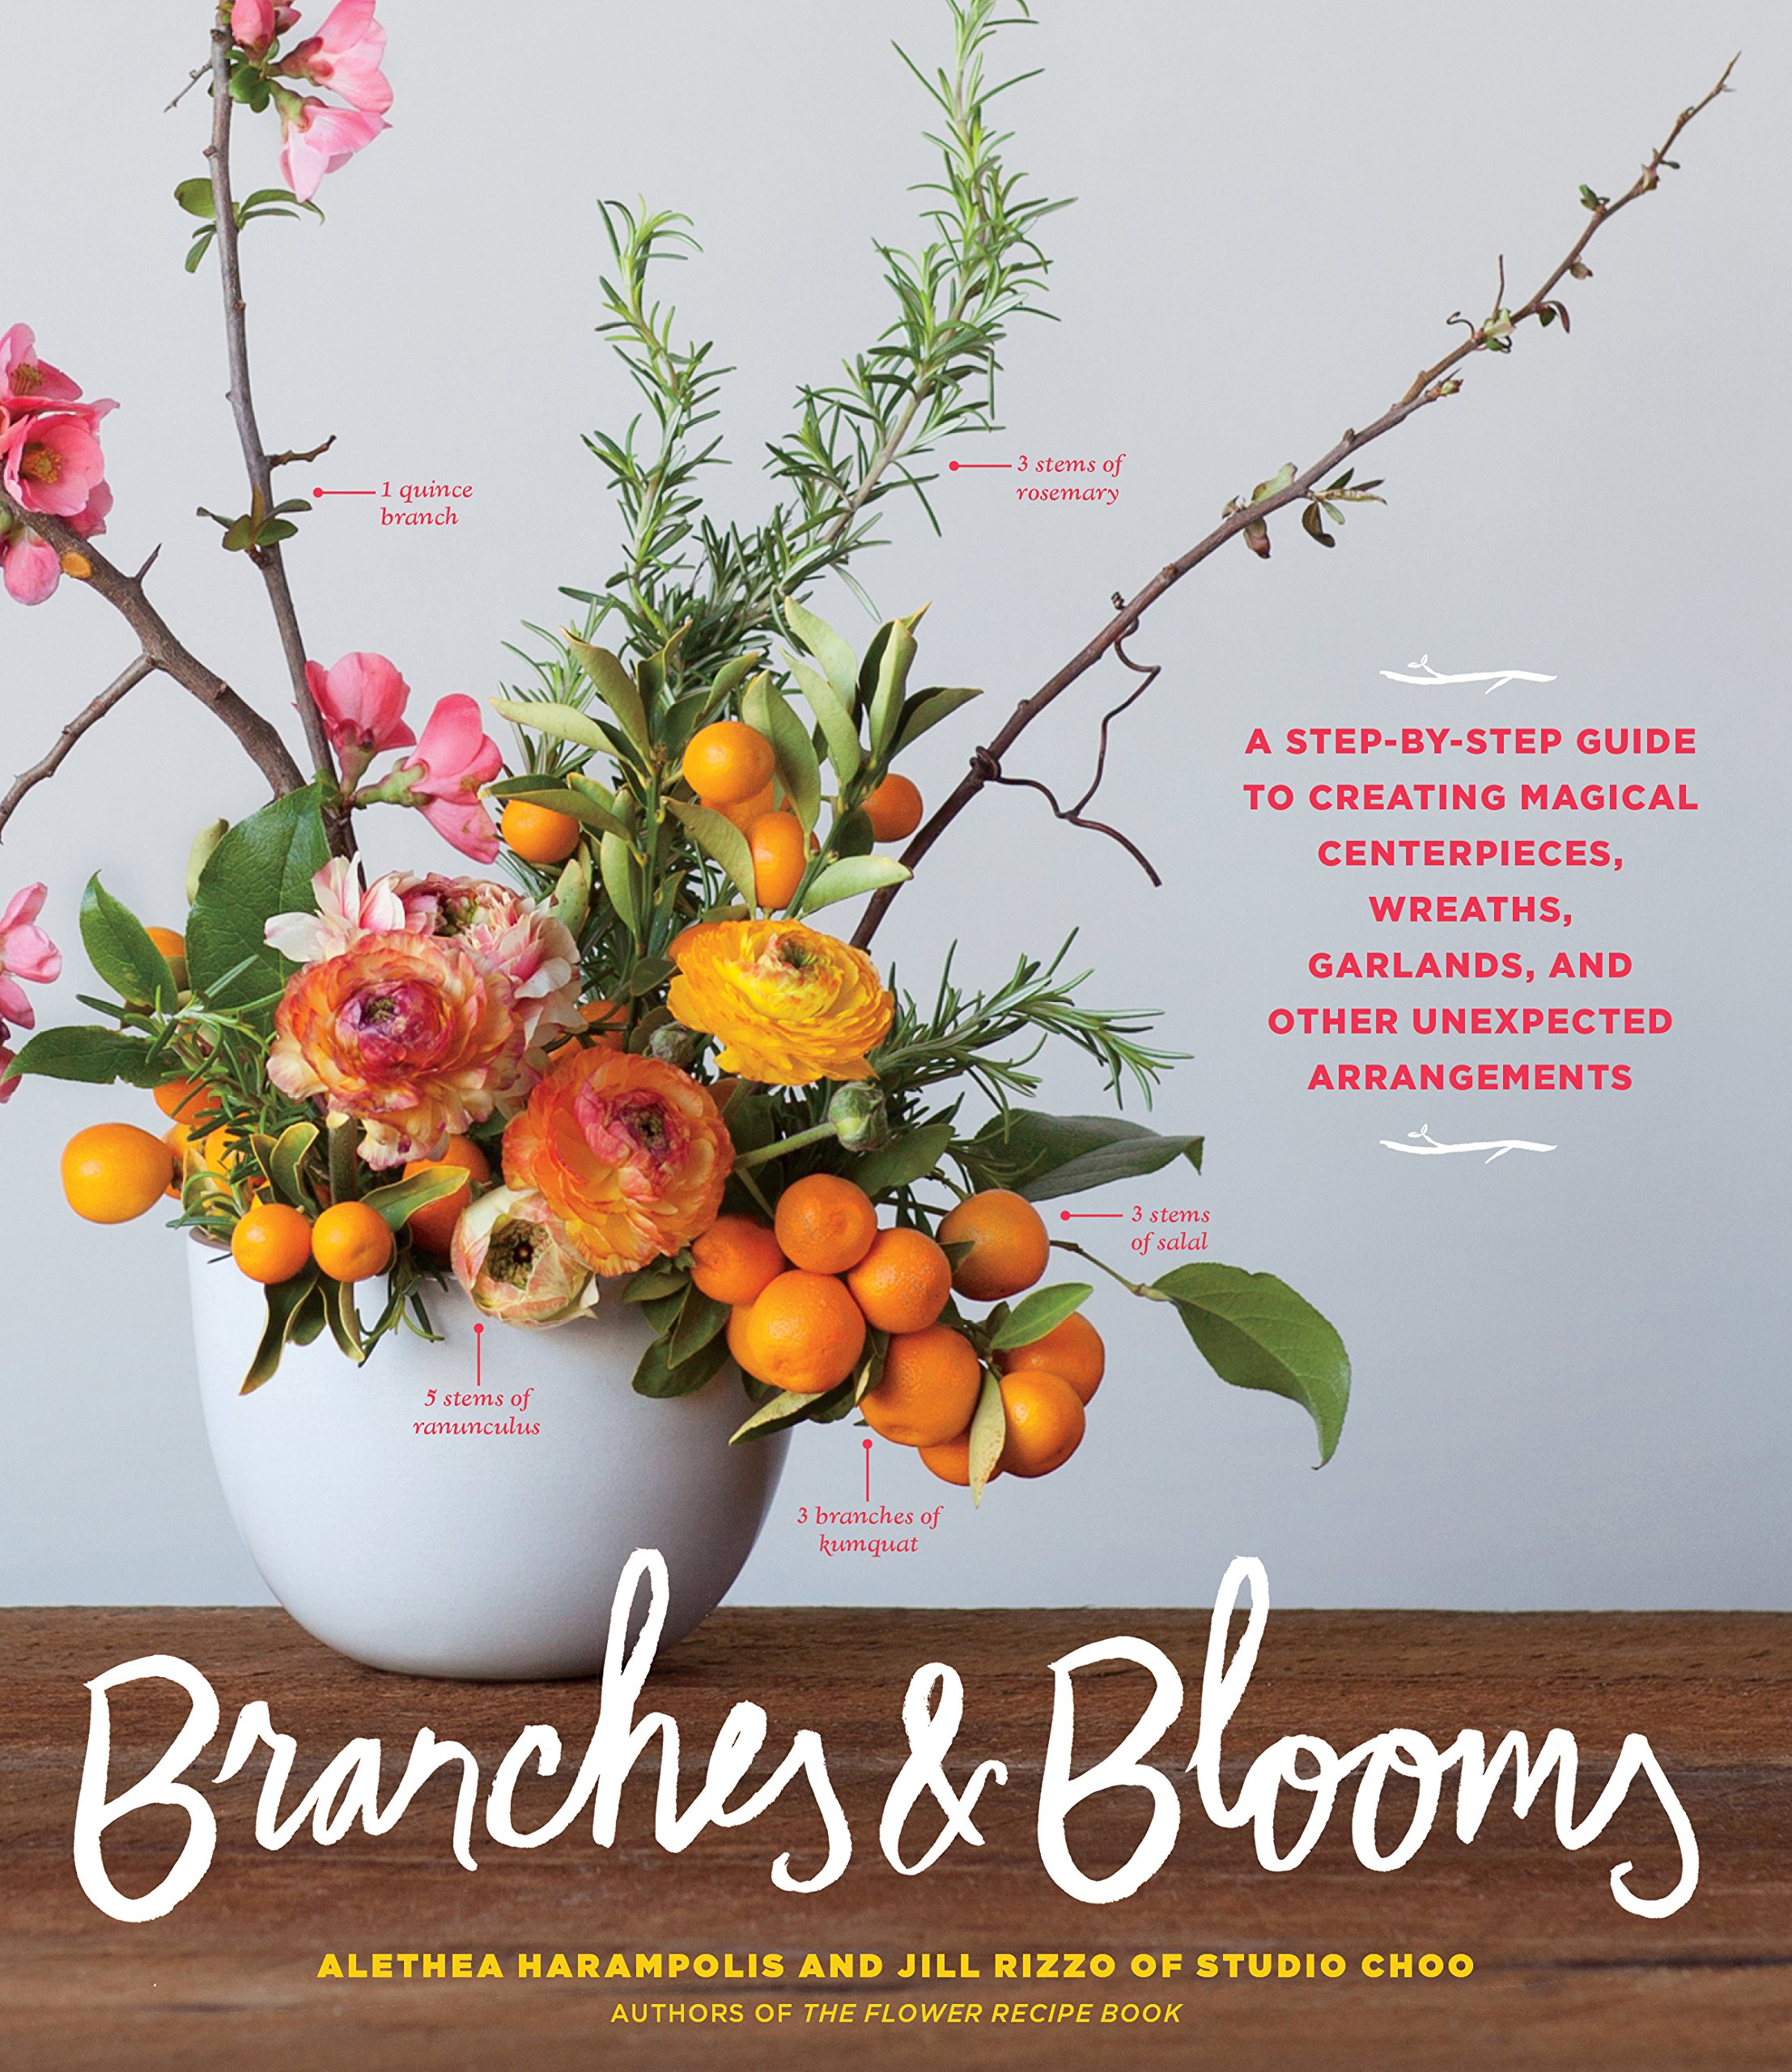 Branches & Blooms | Jill Rizzo, Alethea Harampolis